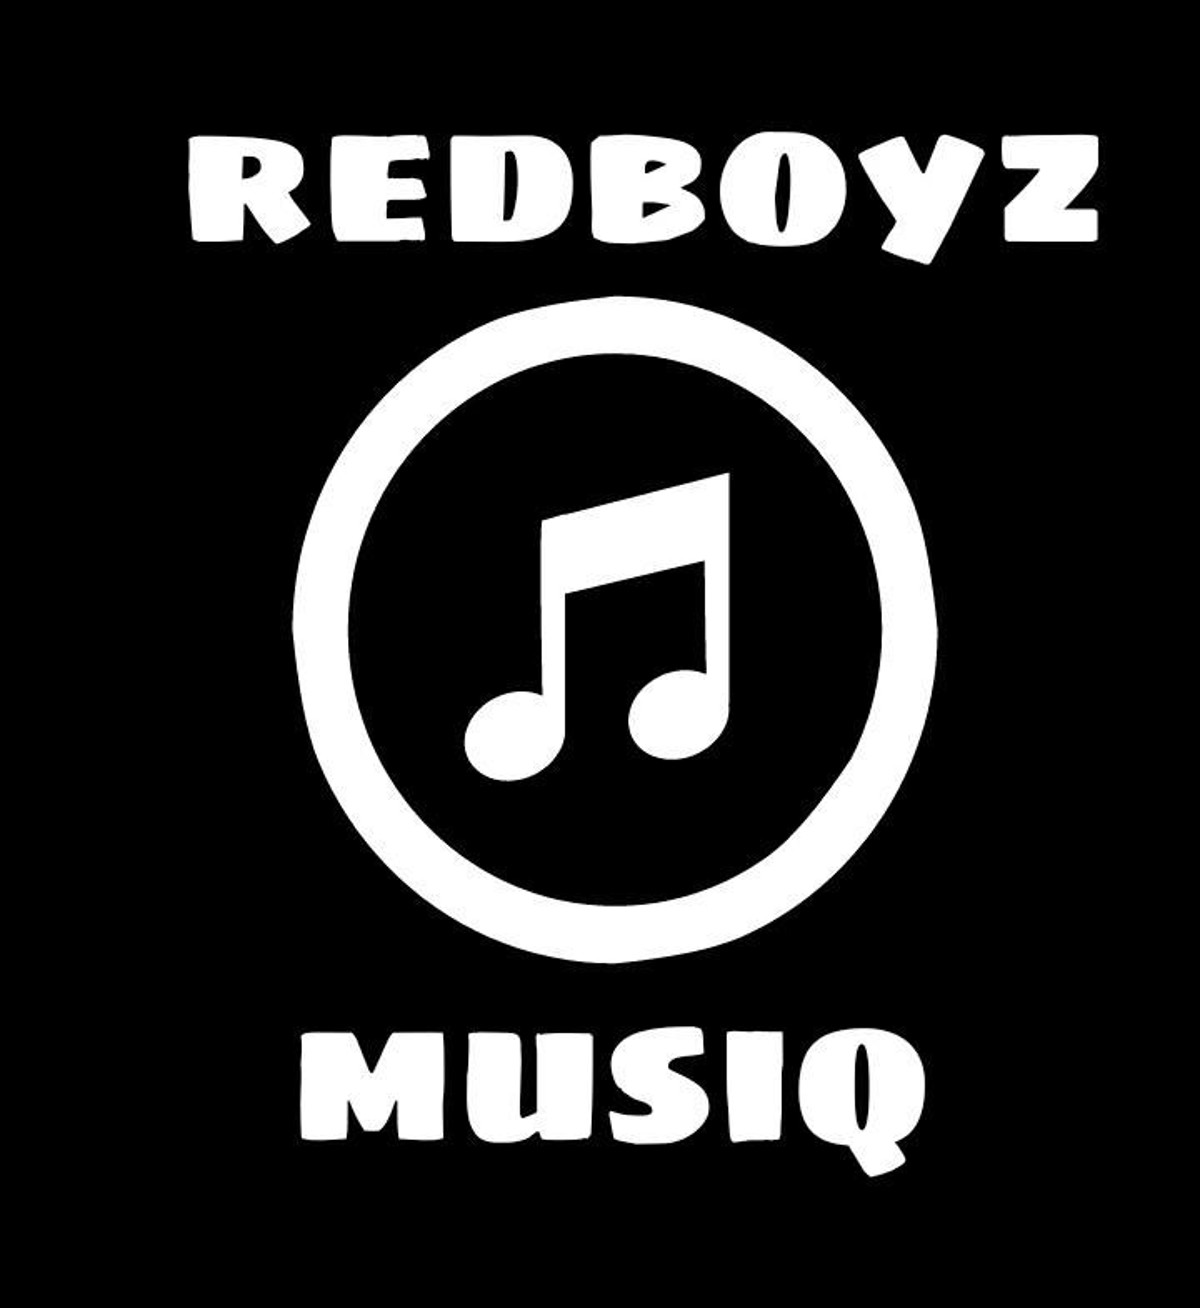 RedBoyz MusiQ - HBD Max (Black House MusiQ)